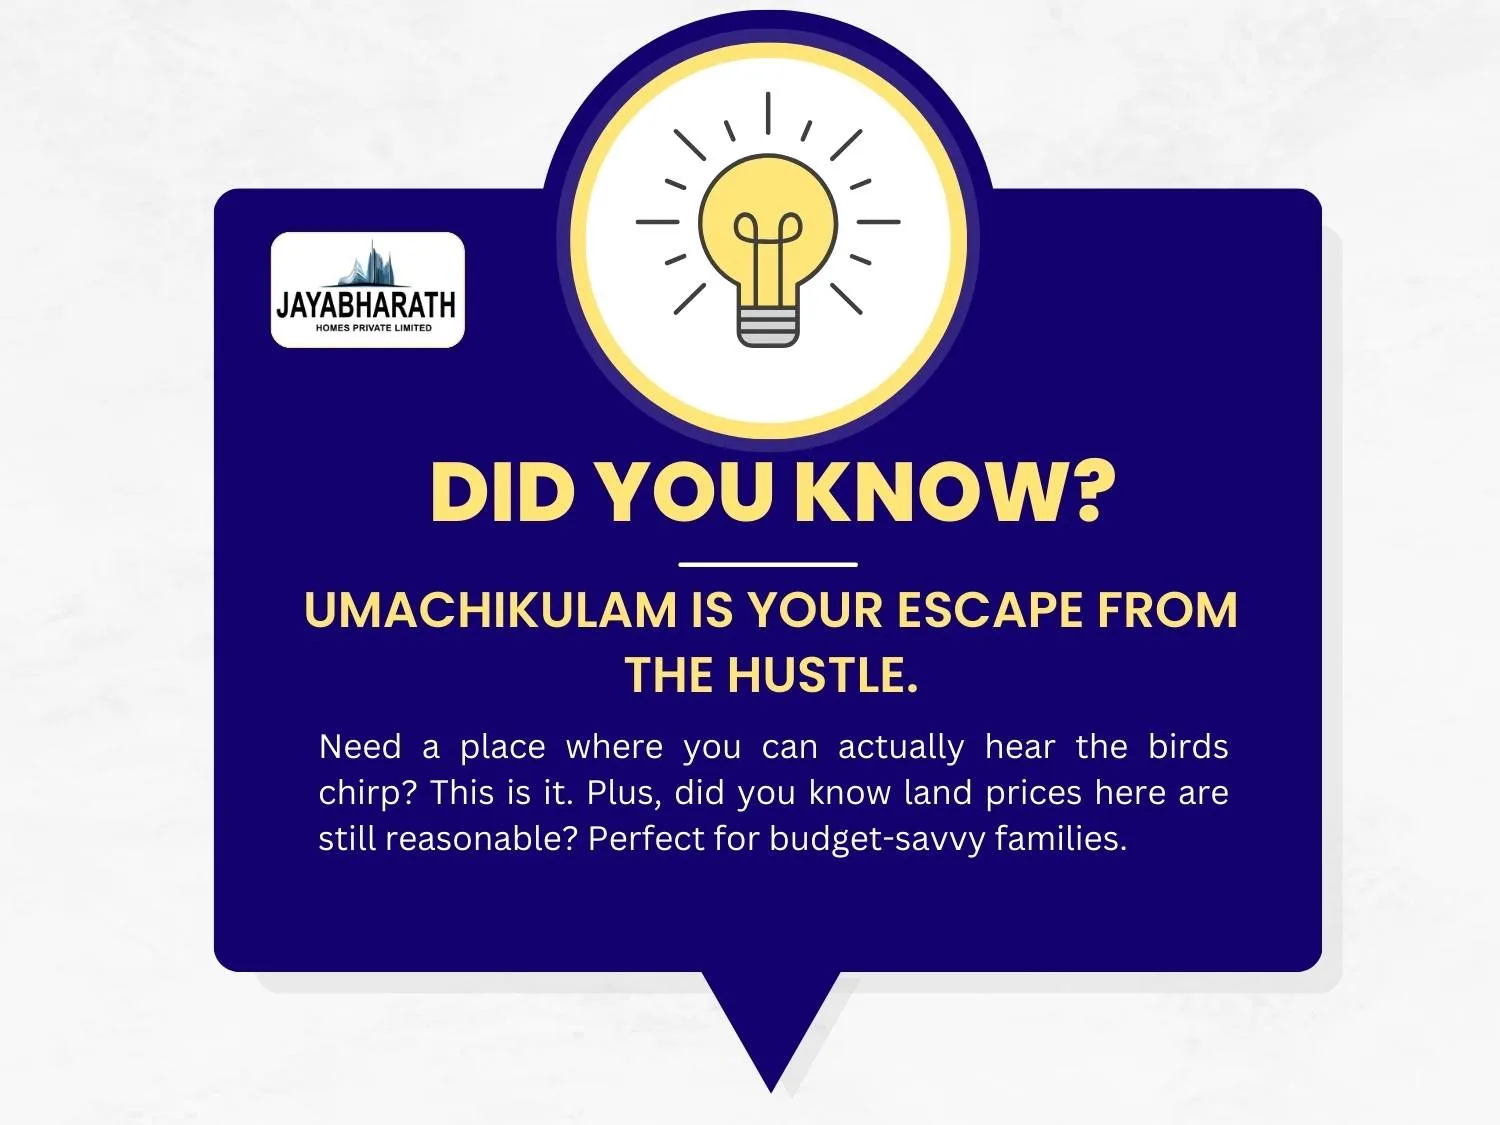 Umachikulam: A Peaceful Haven for Families